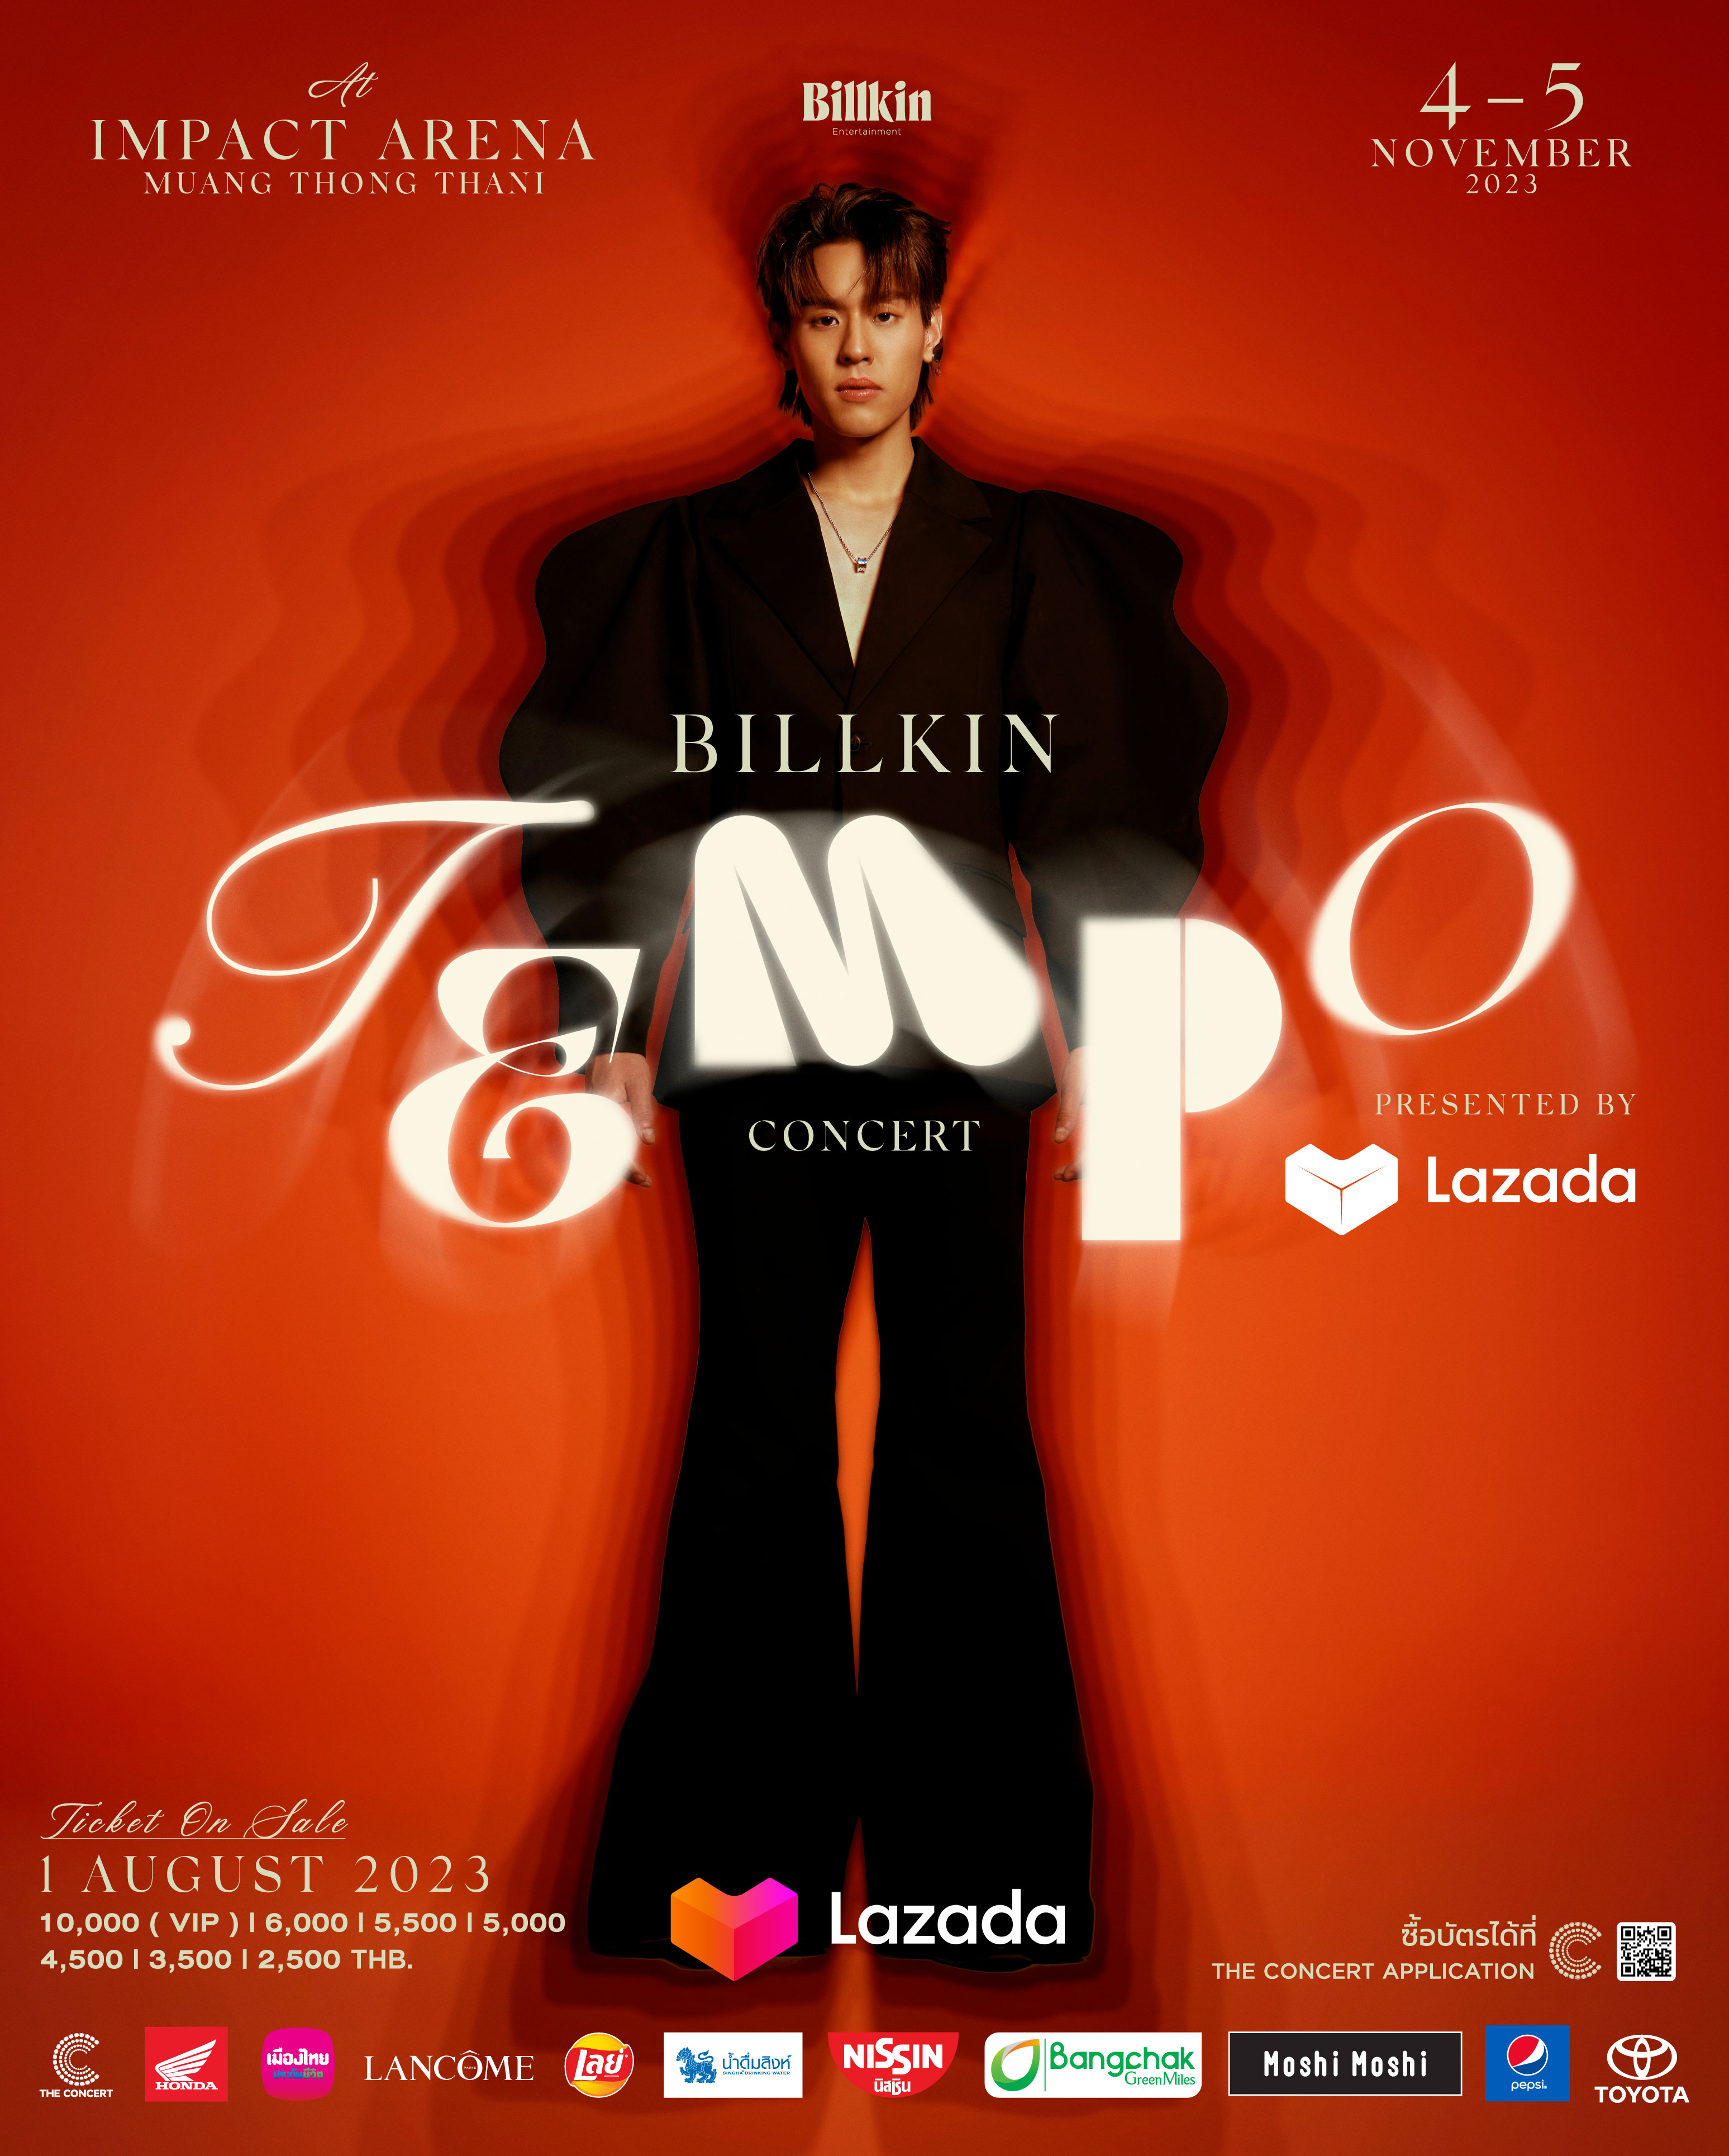 Billkin Tempo Concert Presented by Lazada 00